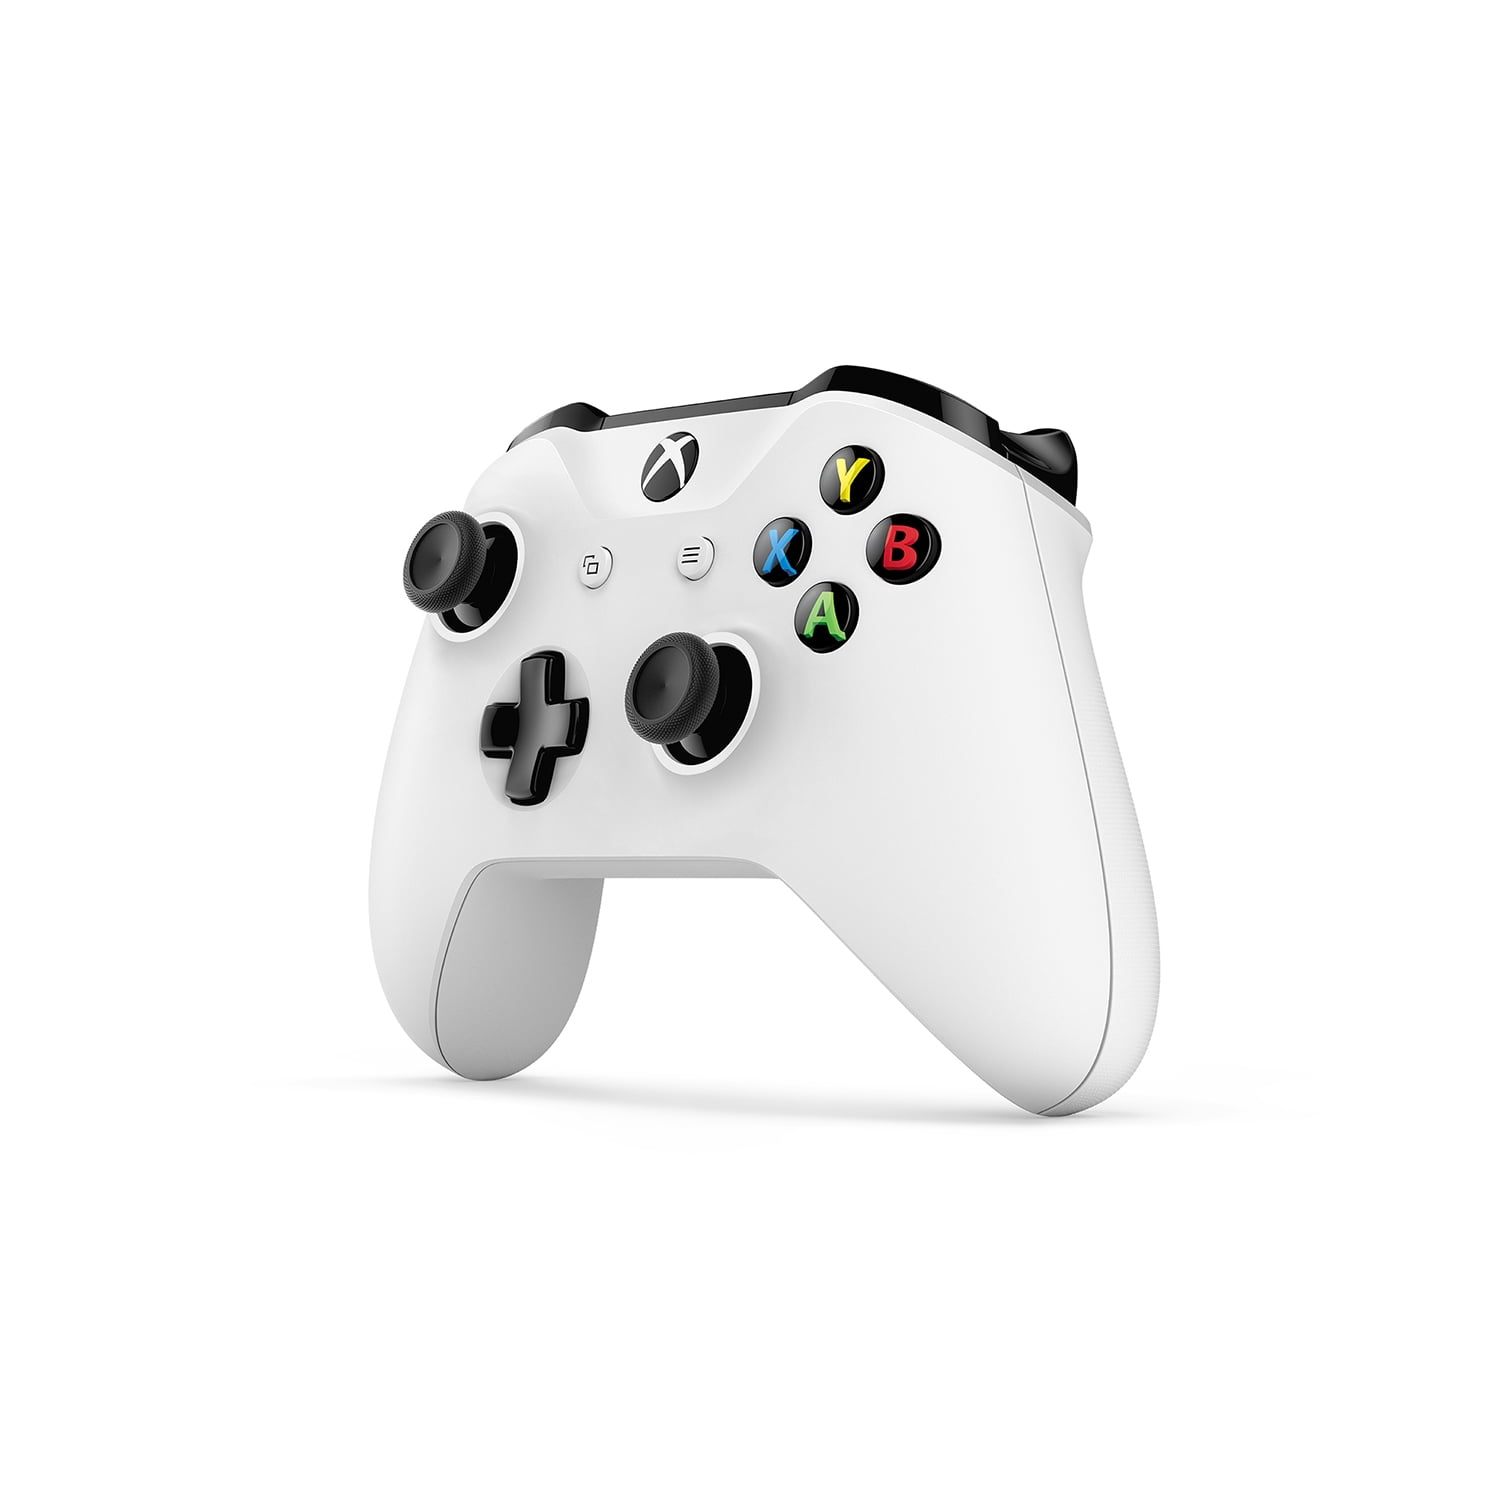 optocht Kalmerend Post Restored Microsoft Xbox One S 1TB Console, White (Refurbished) - Walmart.com